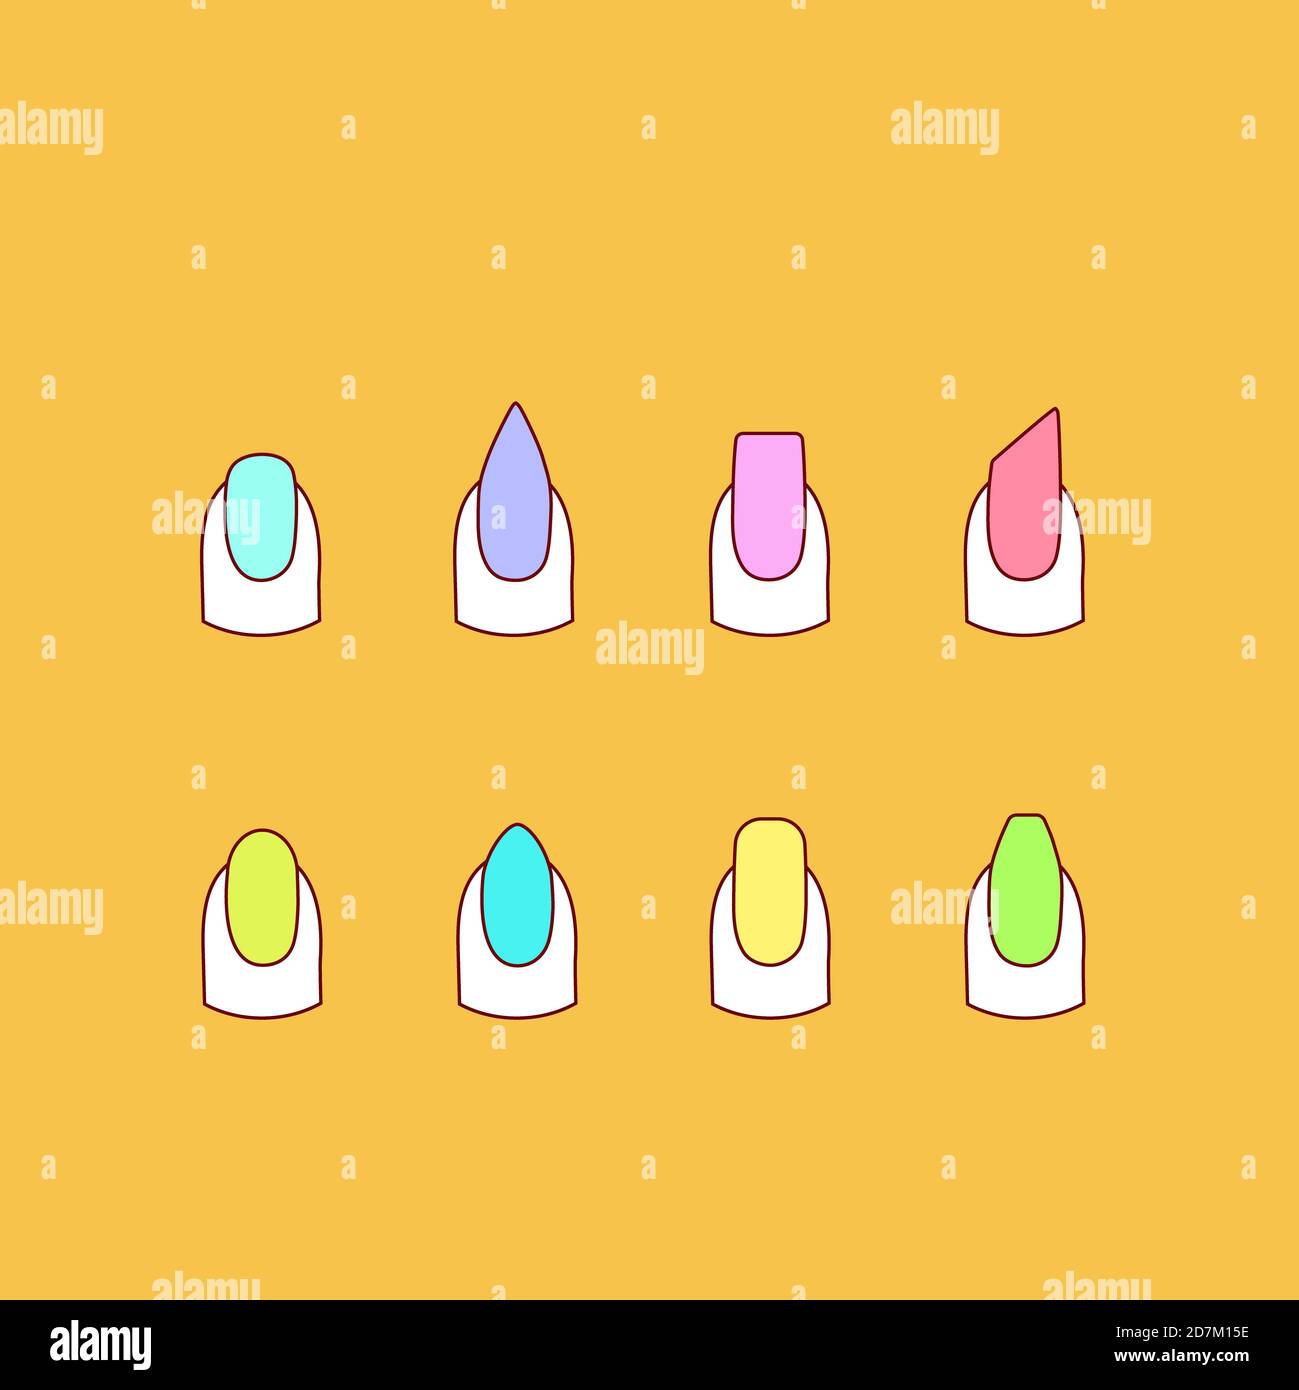 Fingernails of different shapes, illustration. Stock Photo